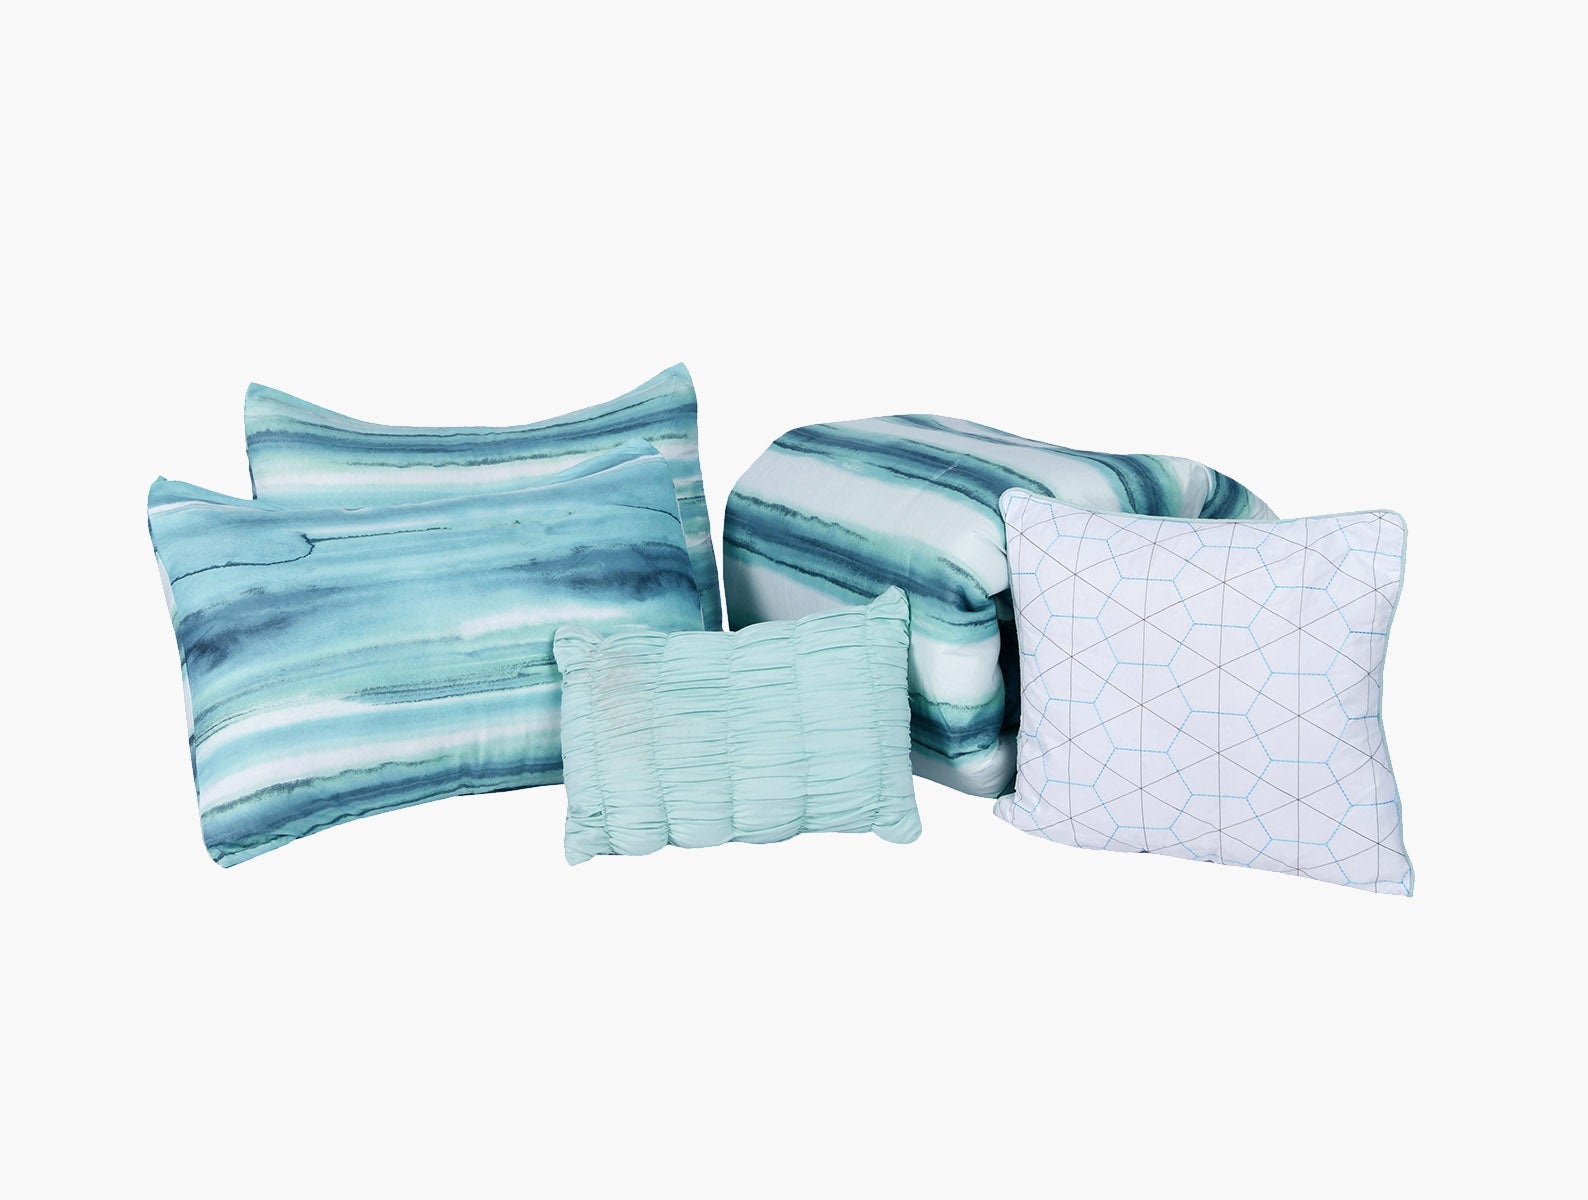 100% Microfiber Comforter Set 5-Pcs - Washy Stripes - Polyester